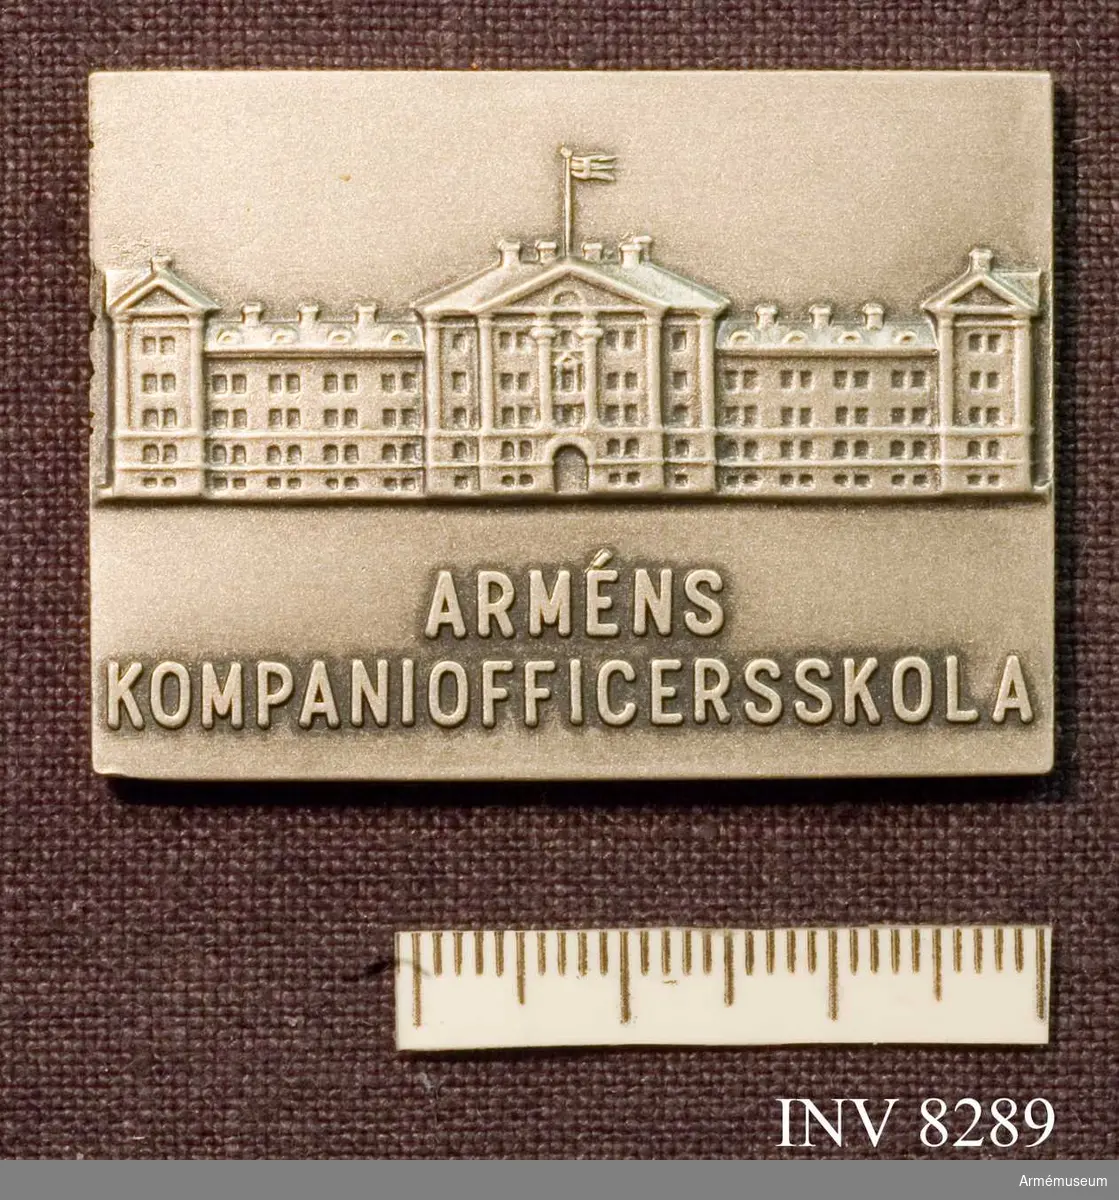 Arméns kompaniofficersskola